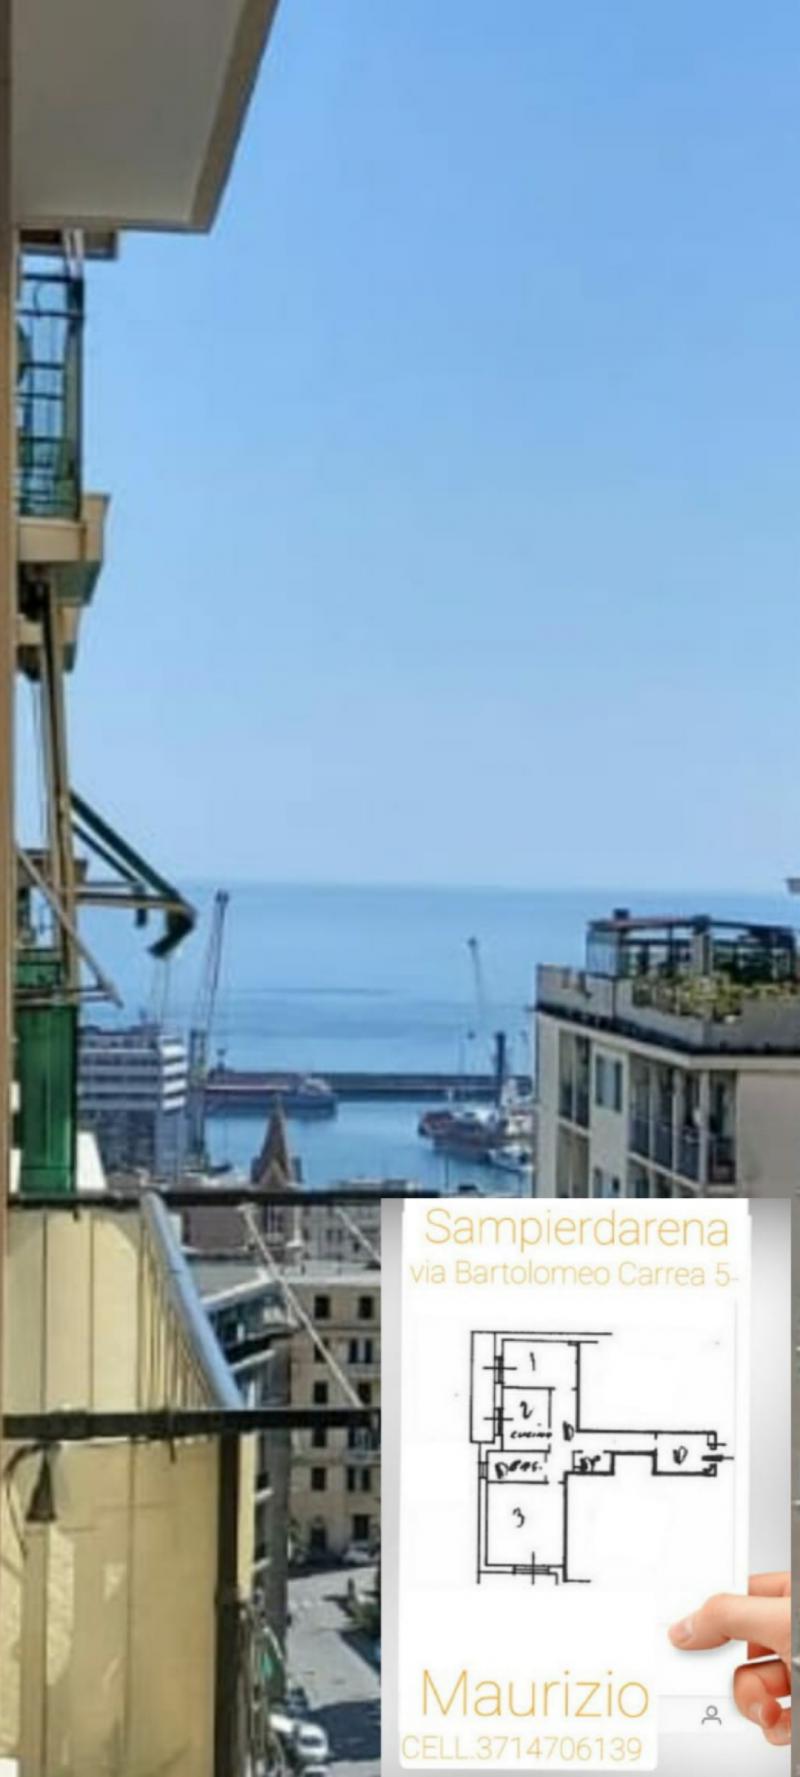 Vendesi Appartamento a Genova via bartolomeo carrea